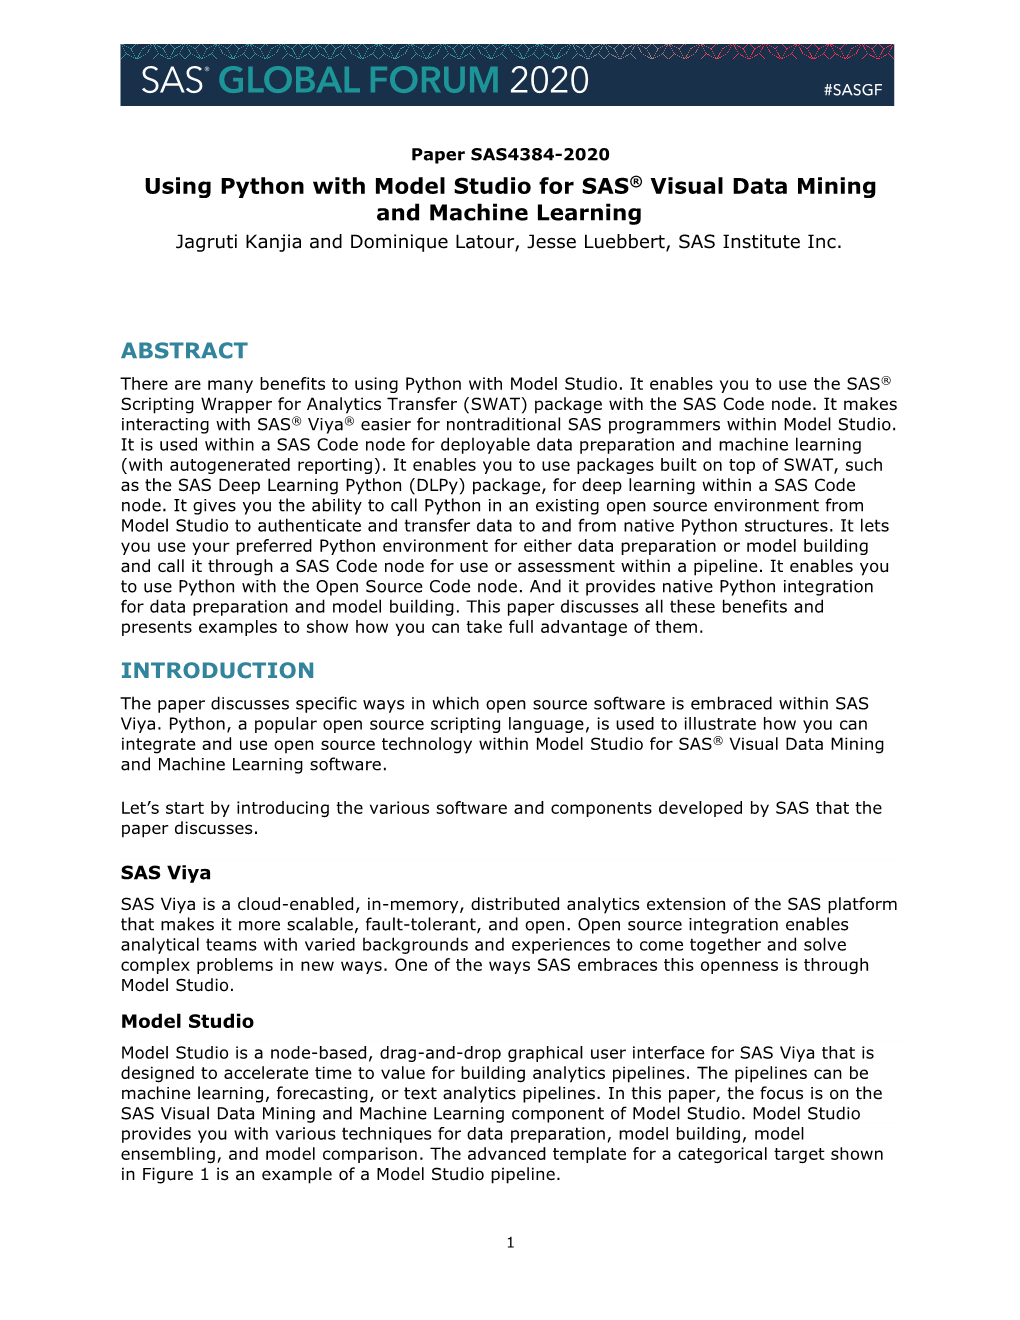 Using Python with Model Studio for SAS® Visual Data Mining and Machine Learning Jagruti Kanjia and Dominique Latour, Jesse Luebbert, SAS Institute Inc